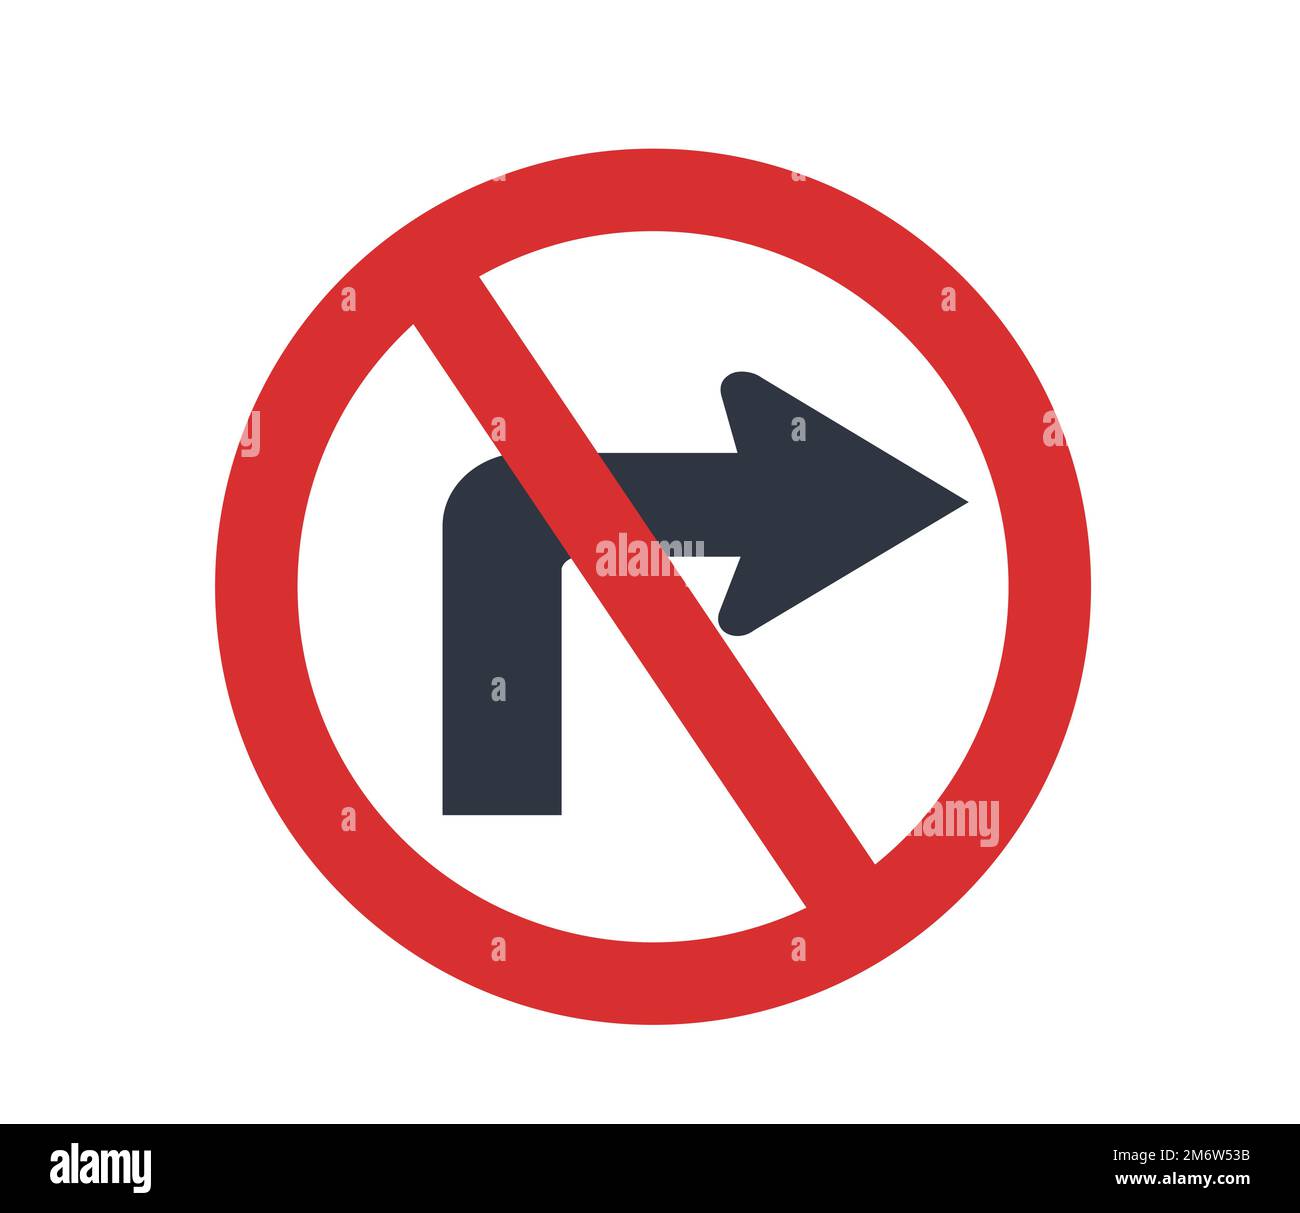 Do not turn right symbol. Traffic signs vectors. Stock Vector